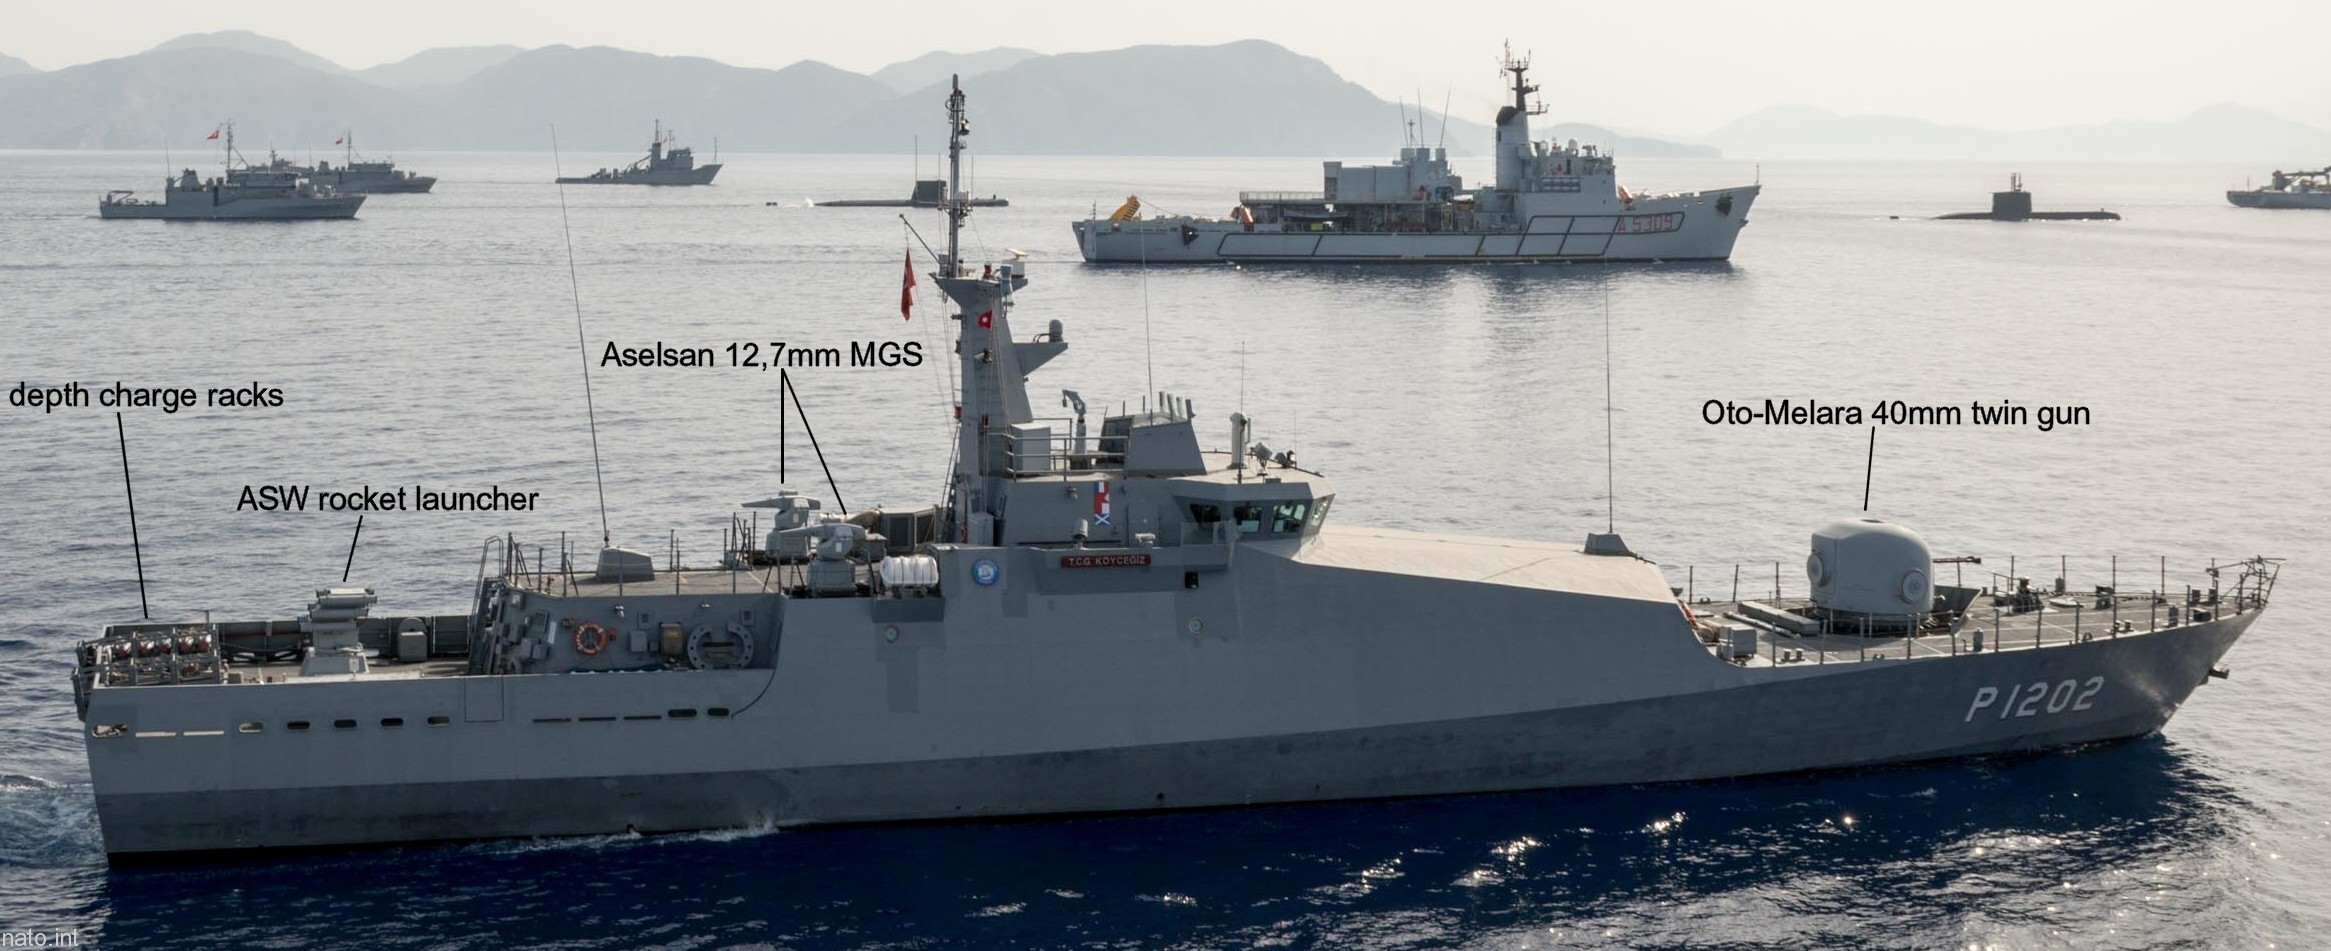 tuzla class new patrol boat armament oto melara 40mm twin gun aselsan 12,7mm machine gun system mgs asw rocket launcher depth charges turkish navy